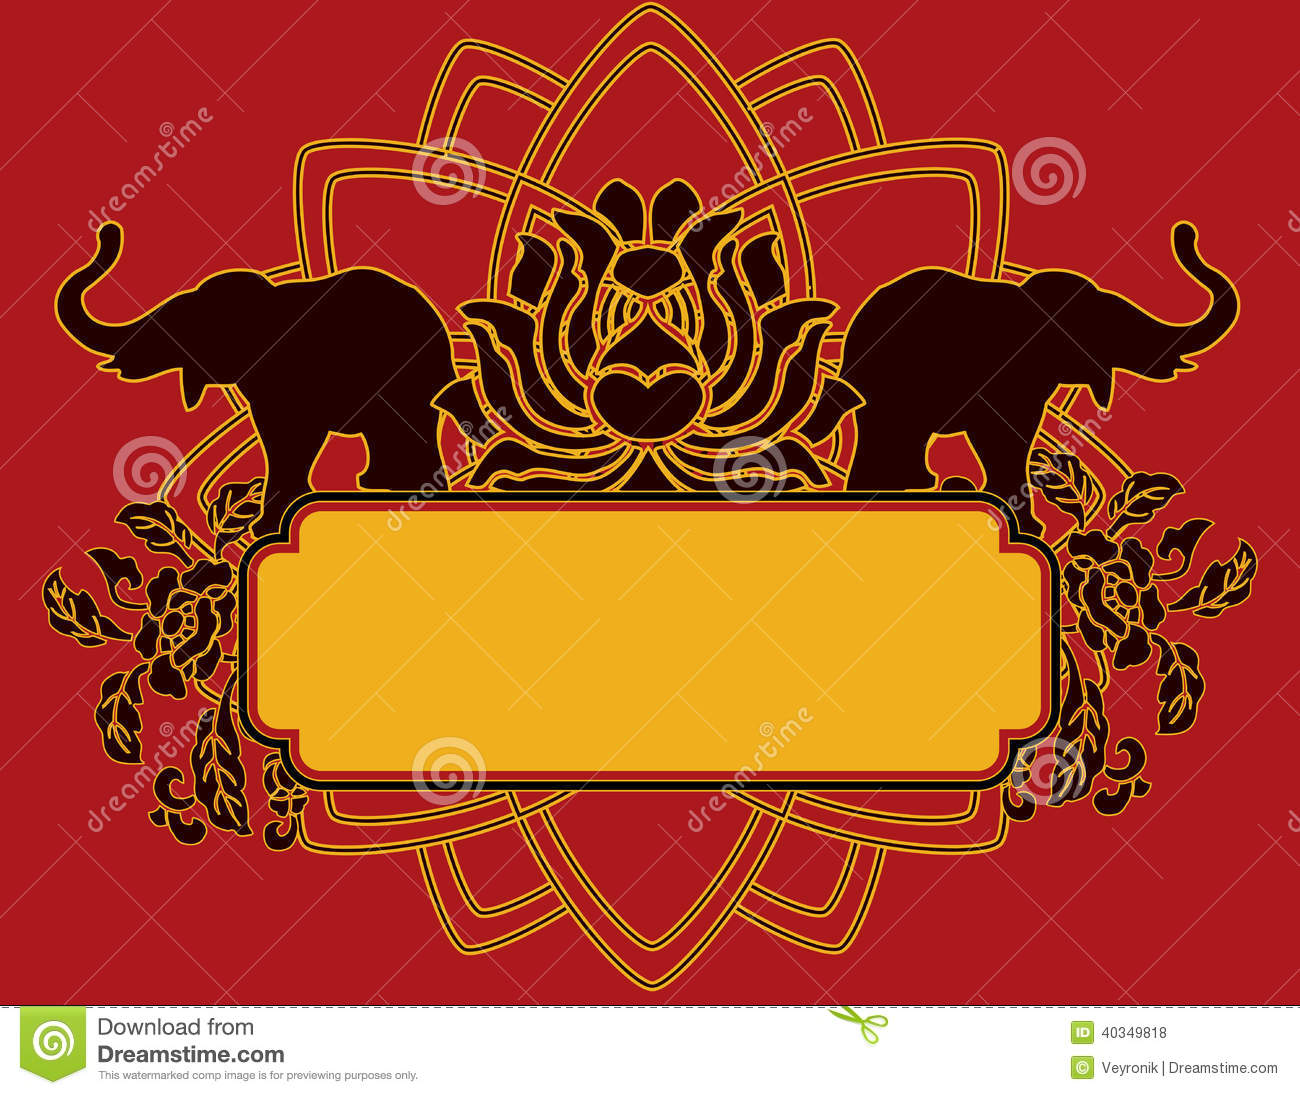 Elephant and Lotus Flower